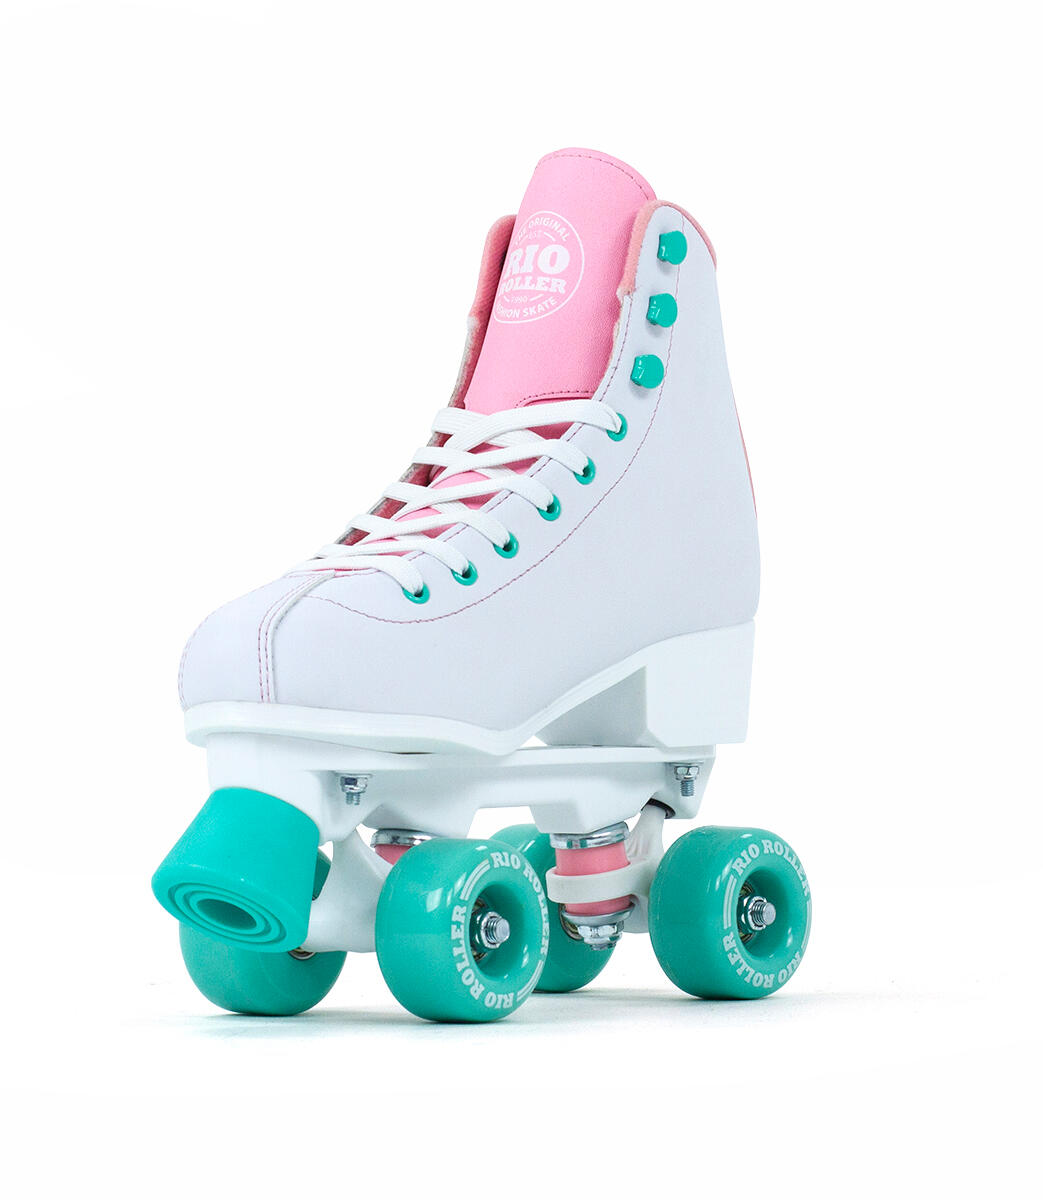 Artist Figure Quad Roller Skates 4/5